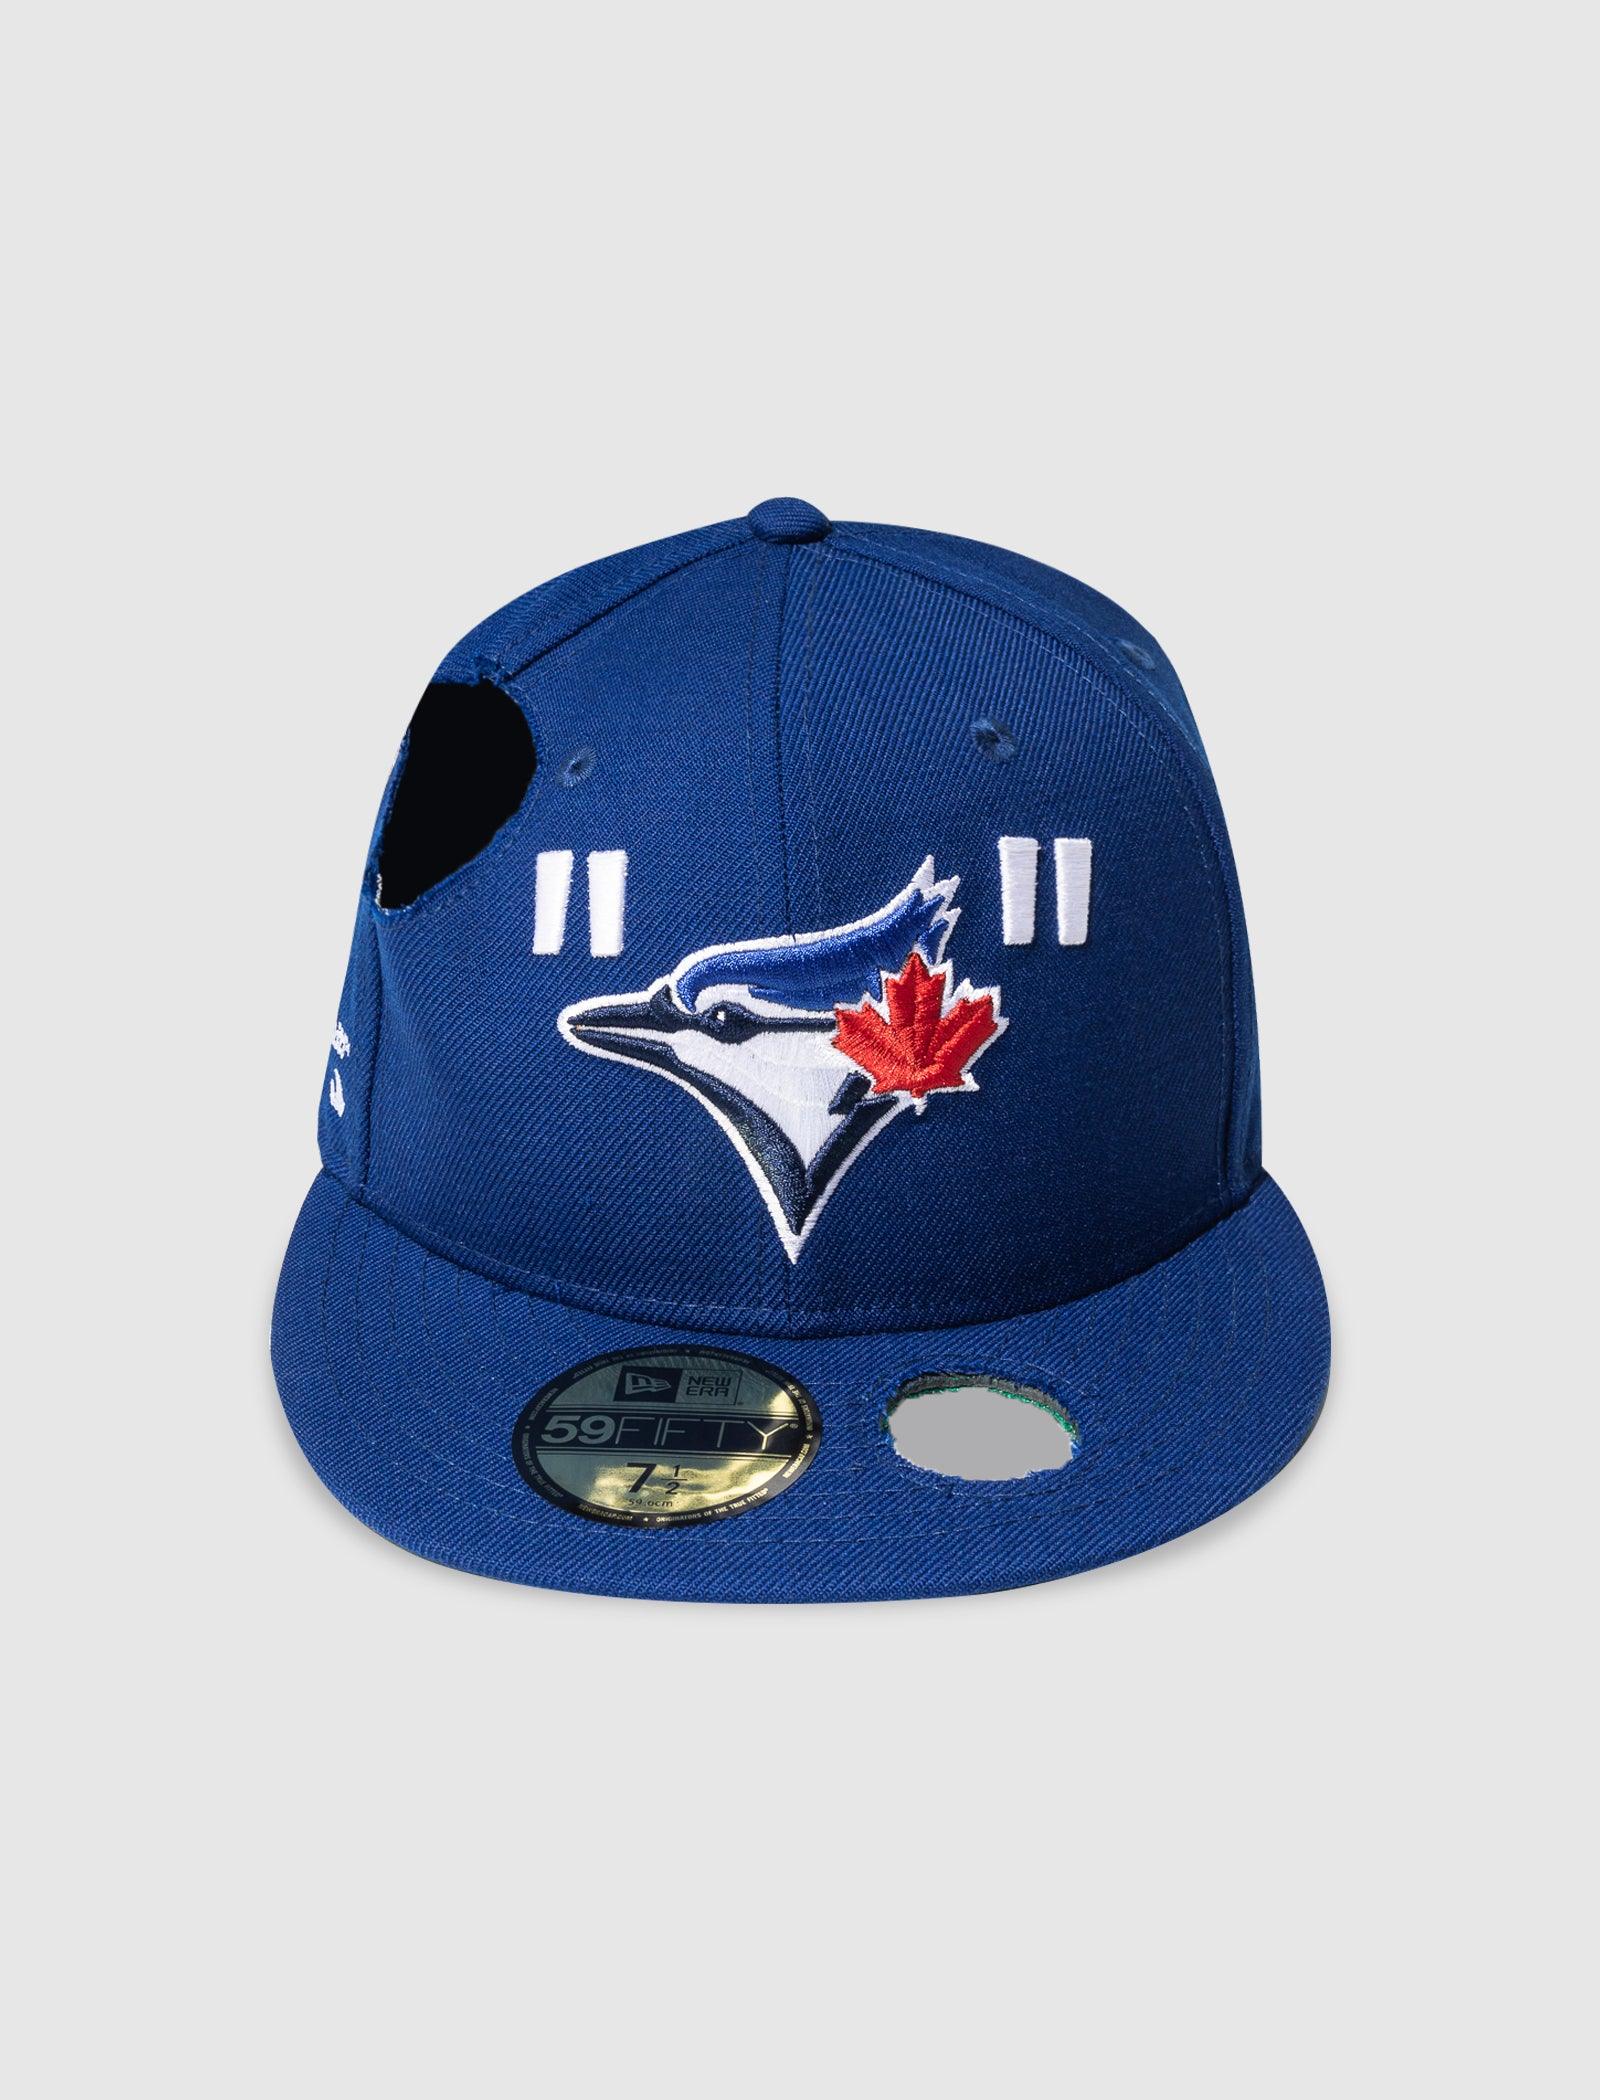 MLB TORONTO BLUEJAYS CAP